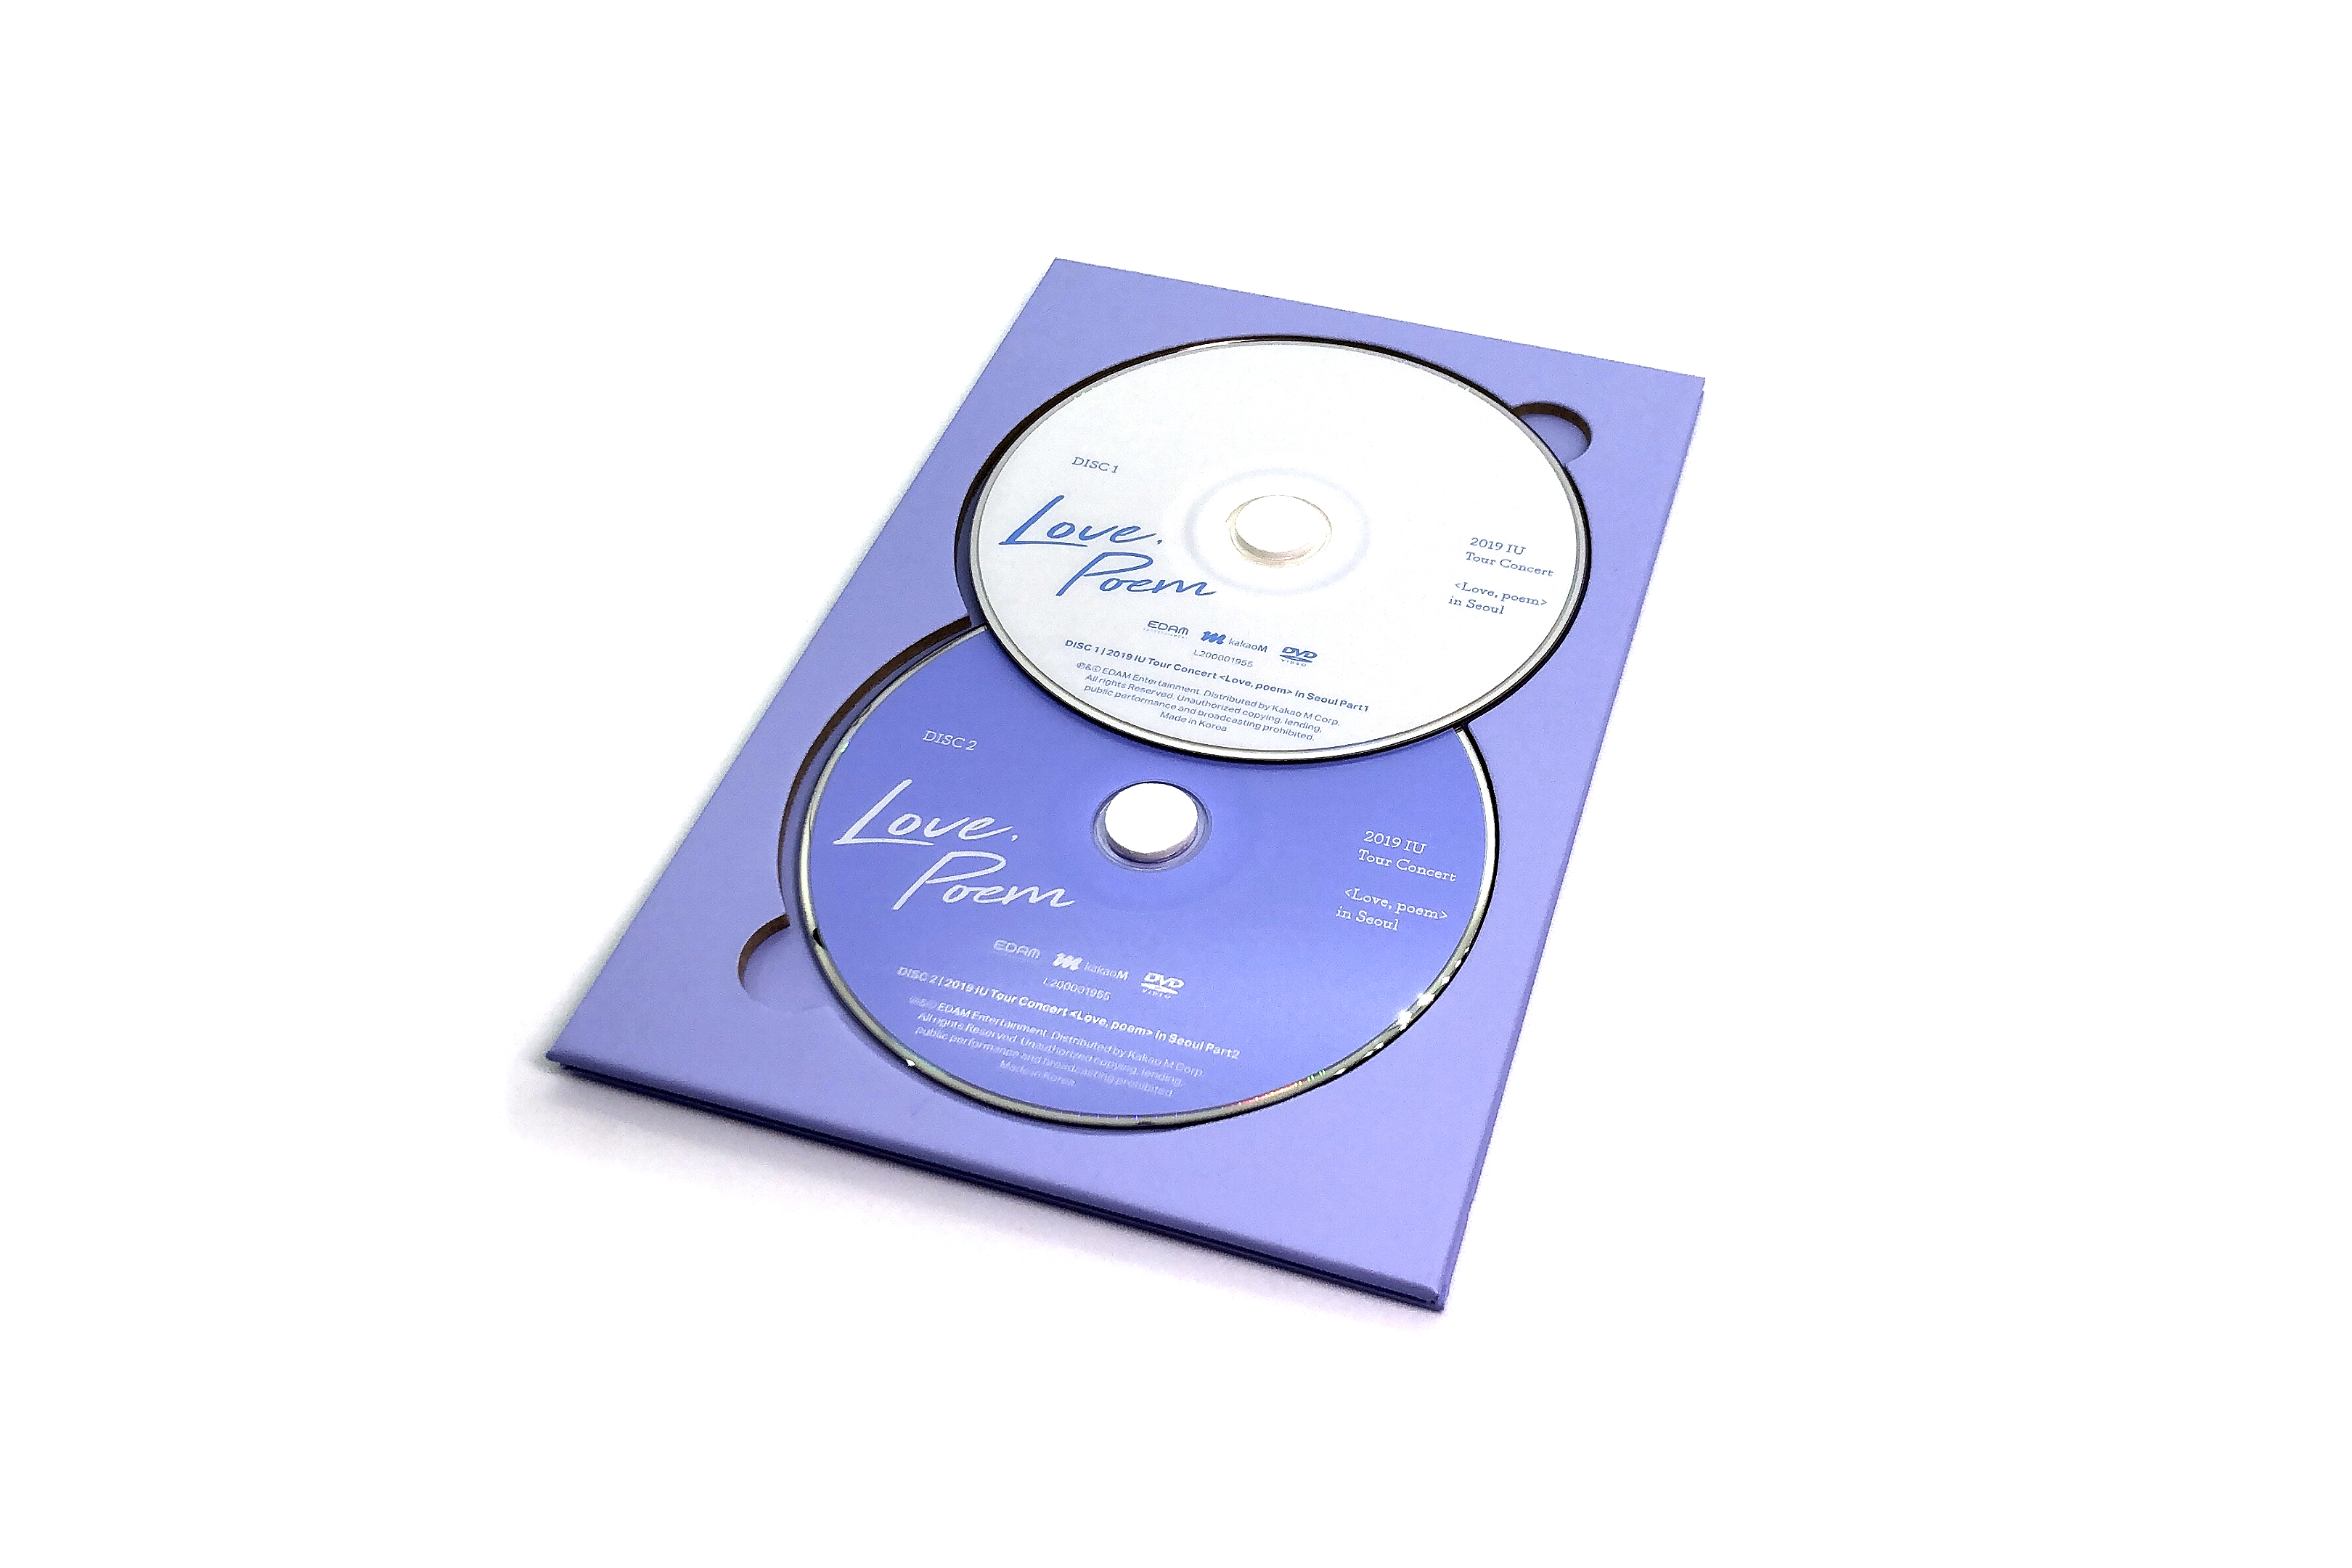 IU Tour Concert <Love, poem> in Seoul DVD / Blu ray